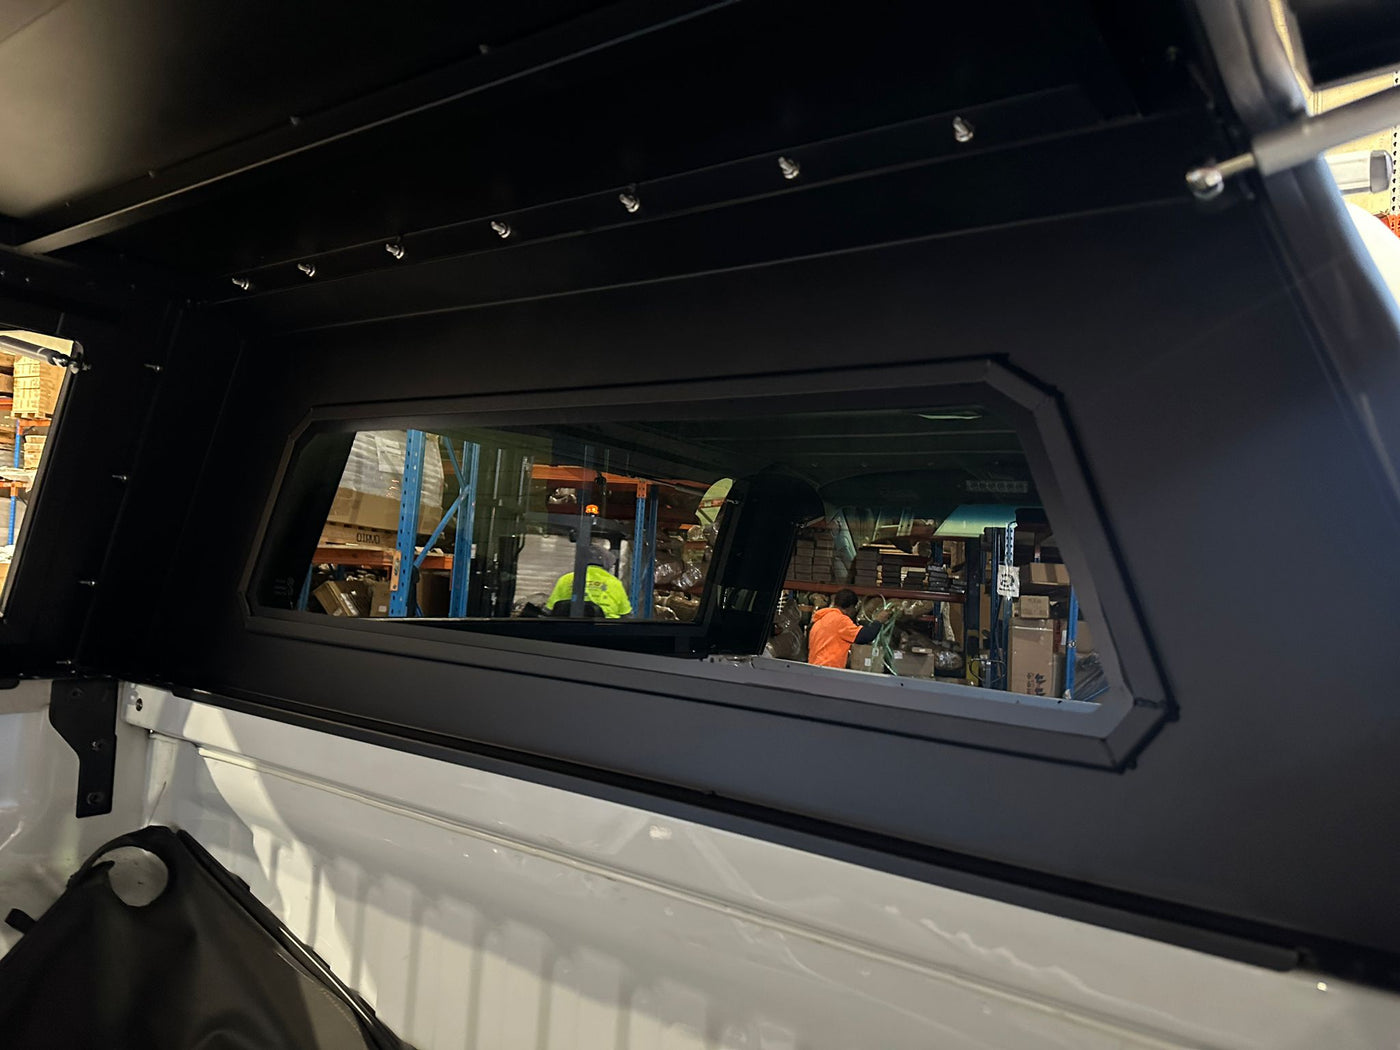 Amazon Aluminium Tub Canopy Suitable For Toyota Hilux SR 2018+ (Pre Order) - OZI4X4 PTY LTD